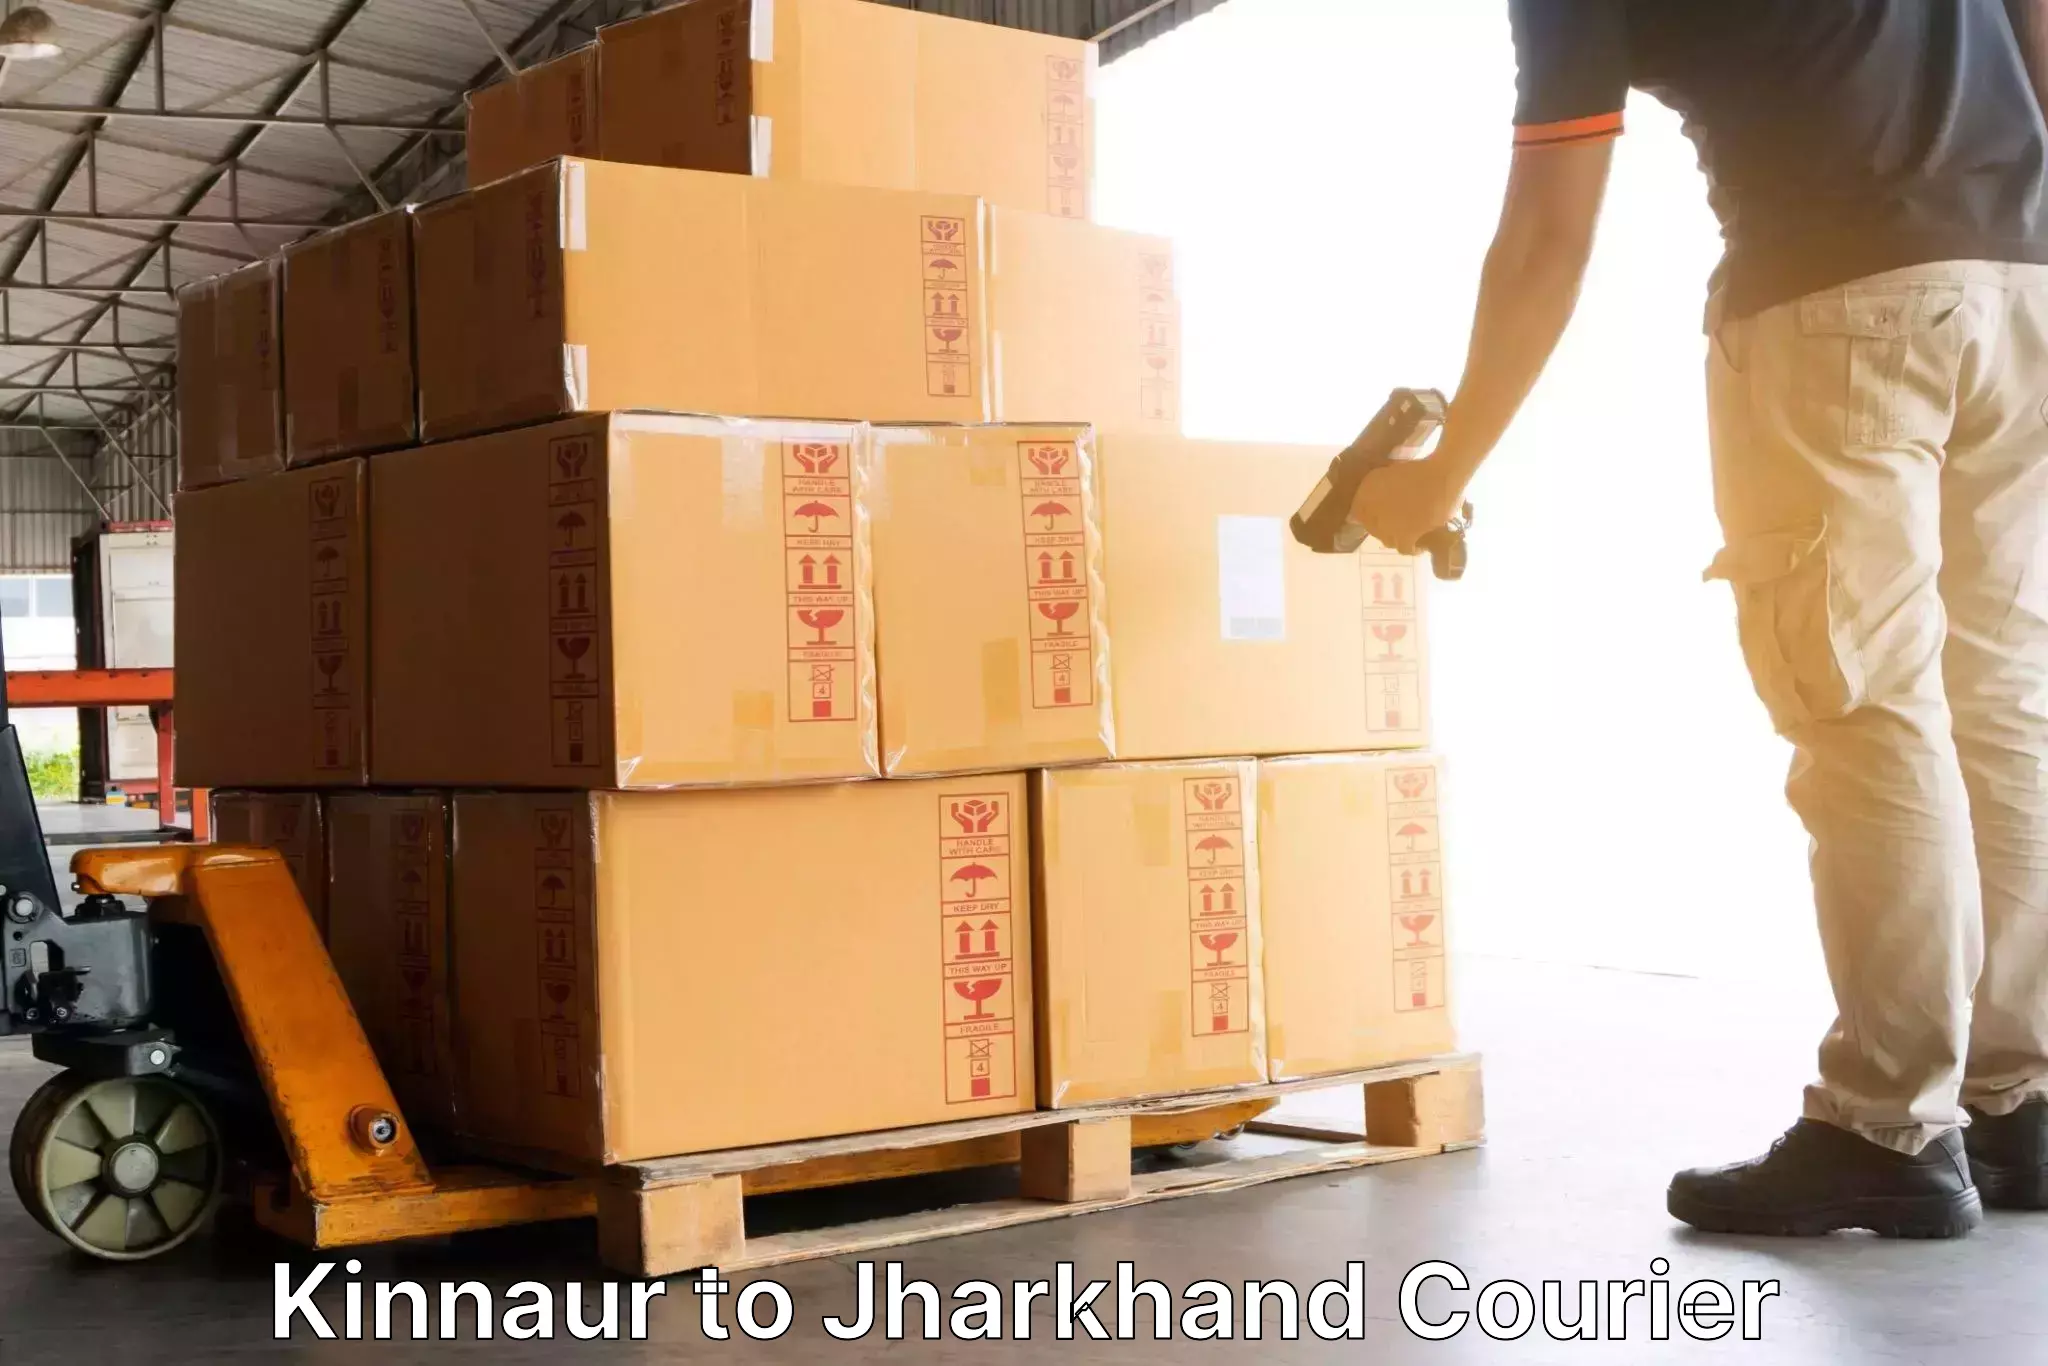 High-priority parcel service Kinnaur to Domchanch